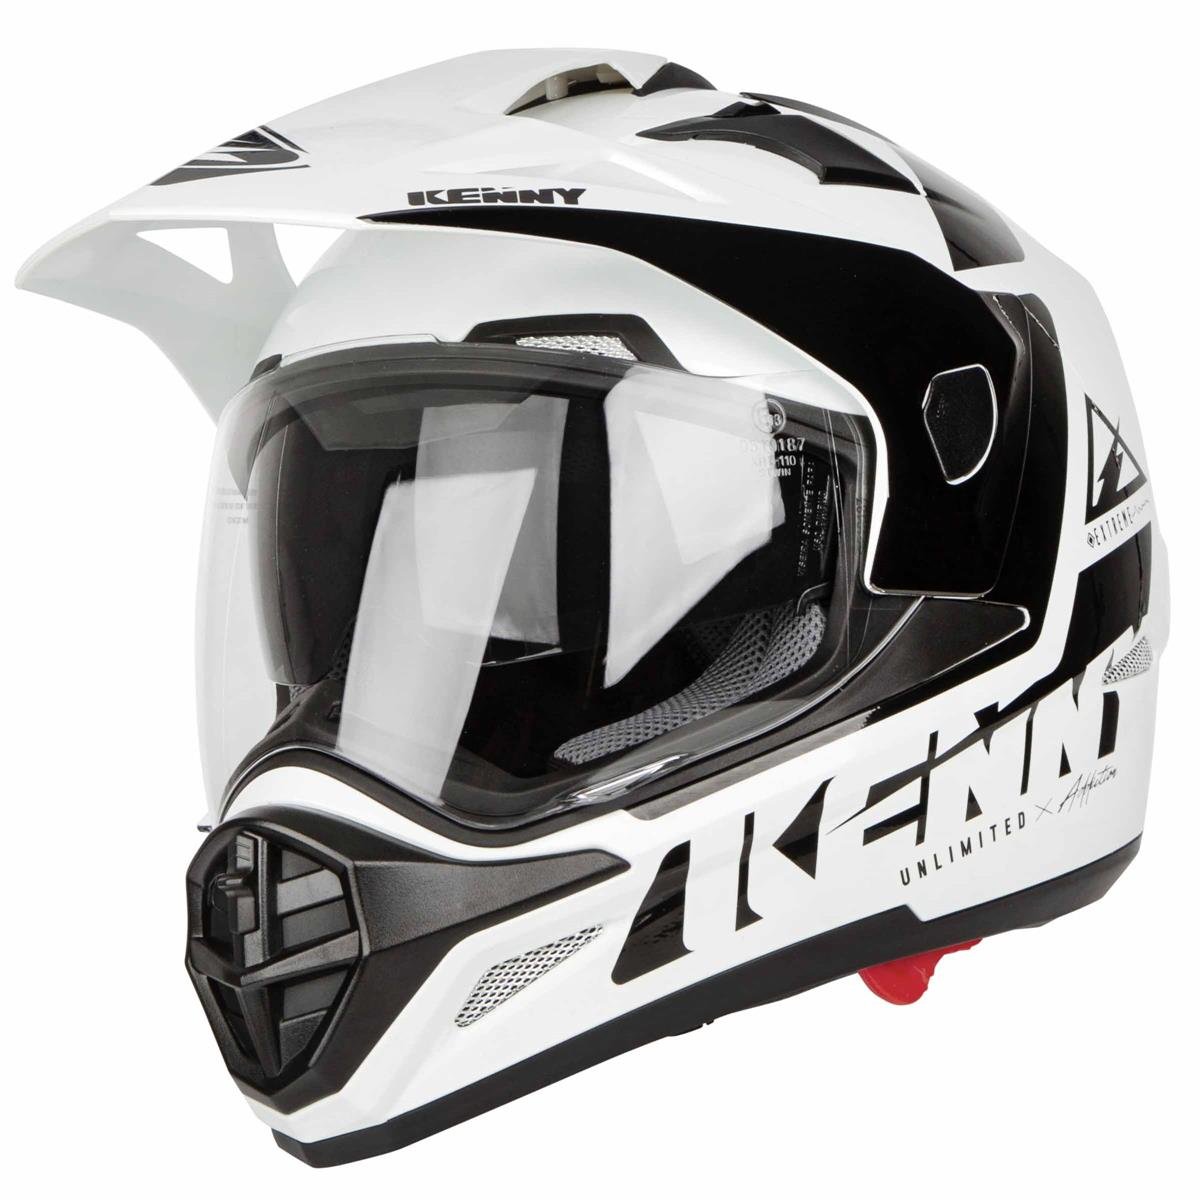 Ingrijpen Lift erven Kenny Adventure Helmet Extreme White/Black | Maciag Offroad